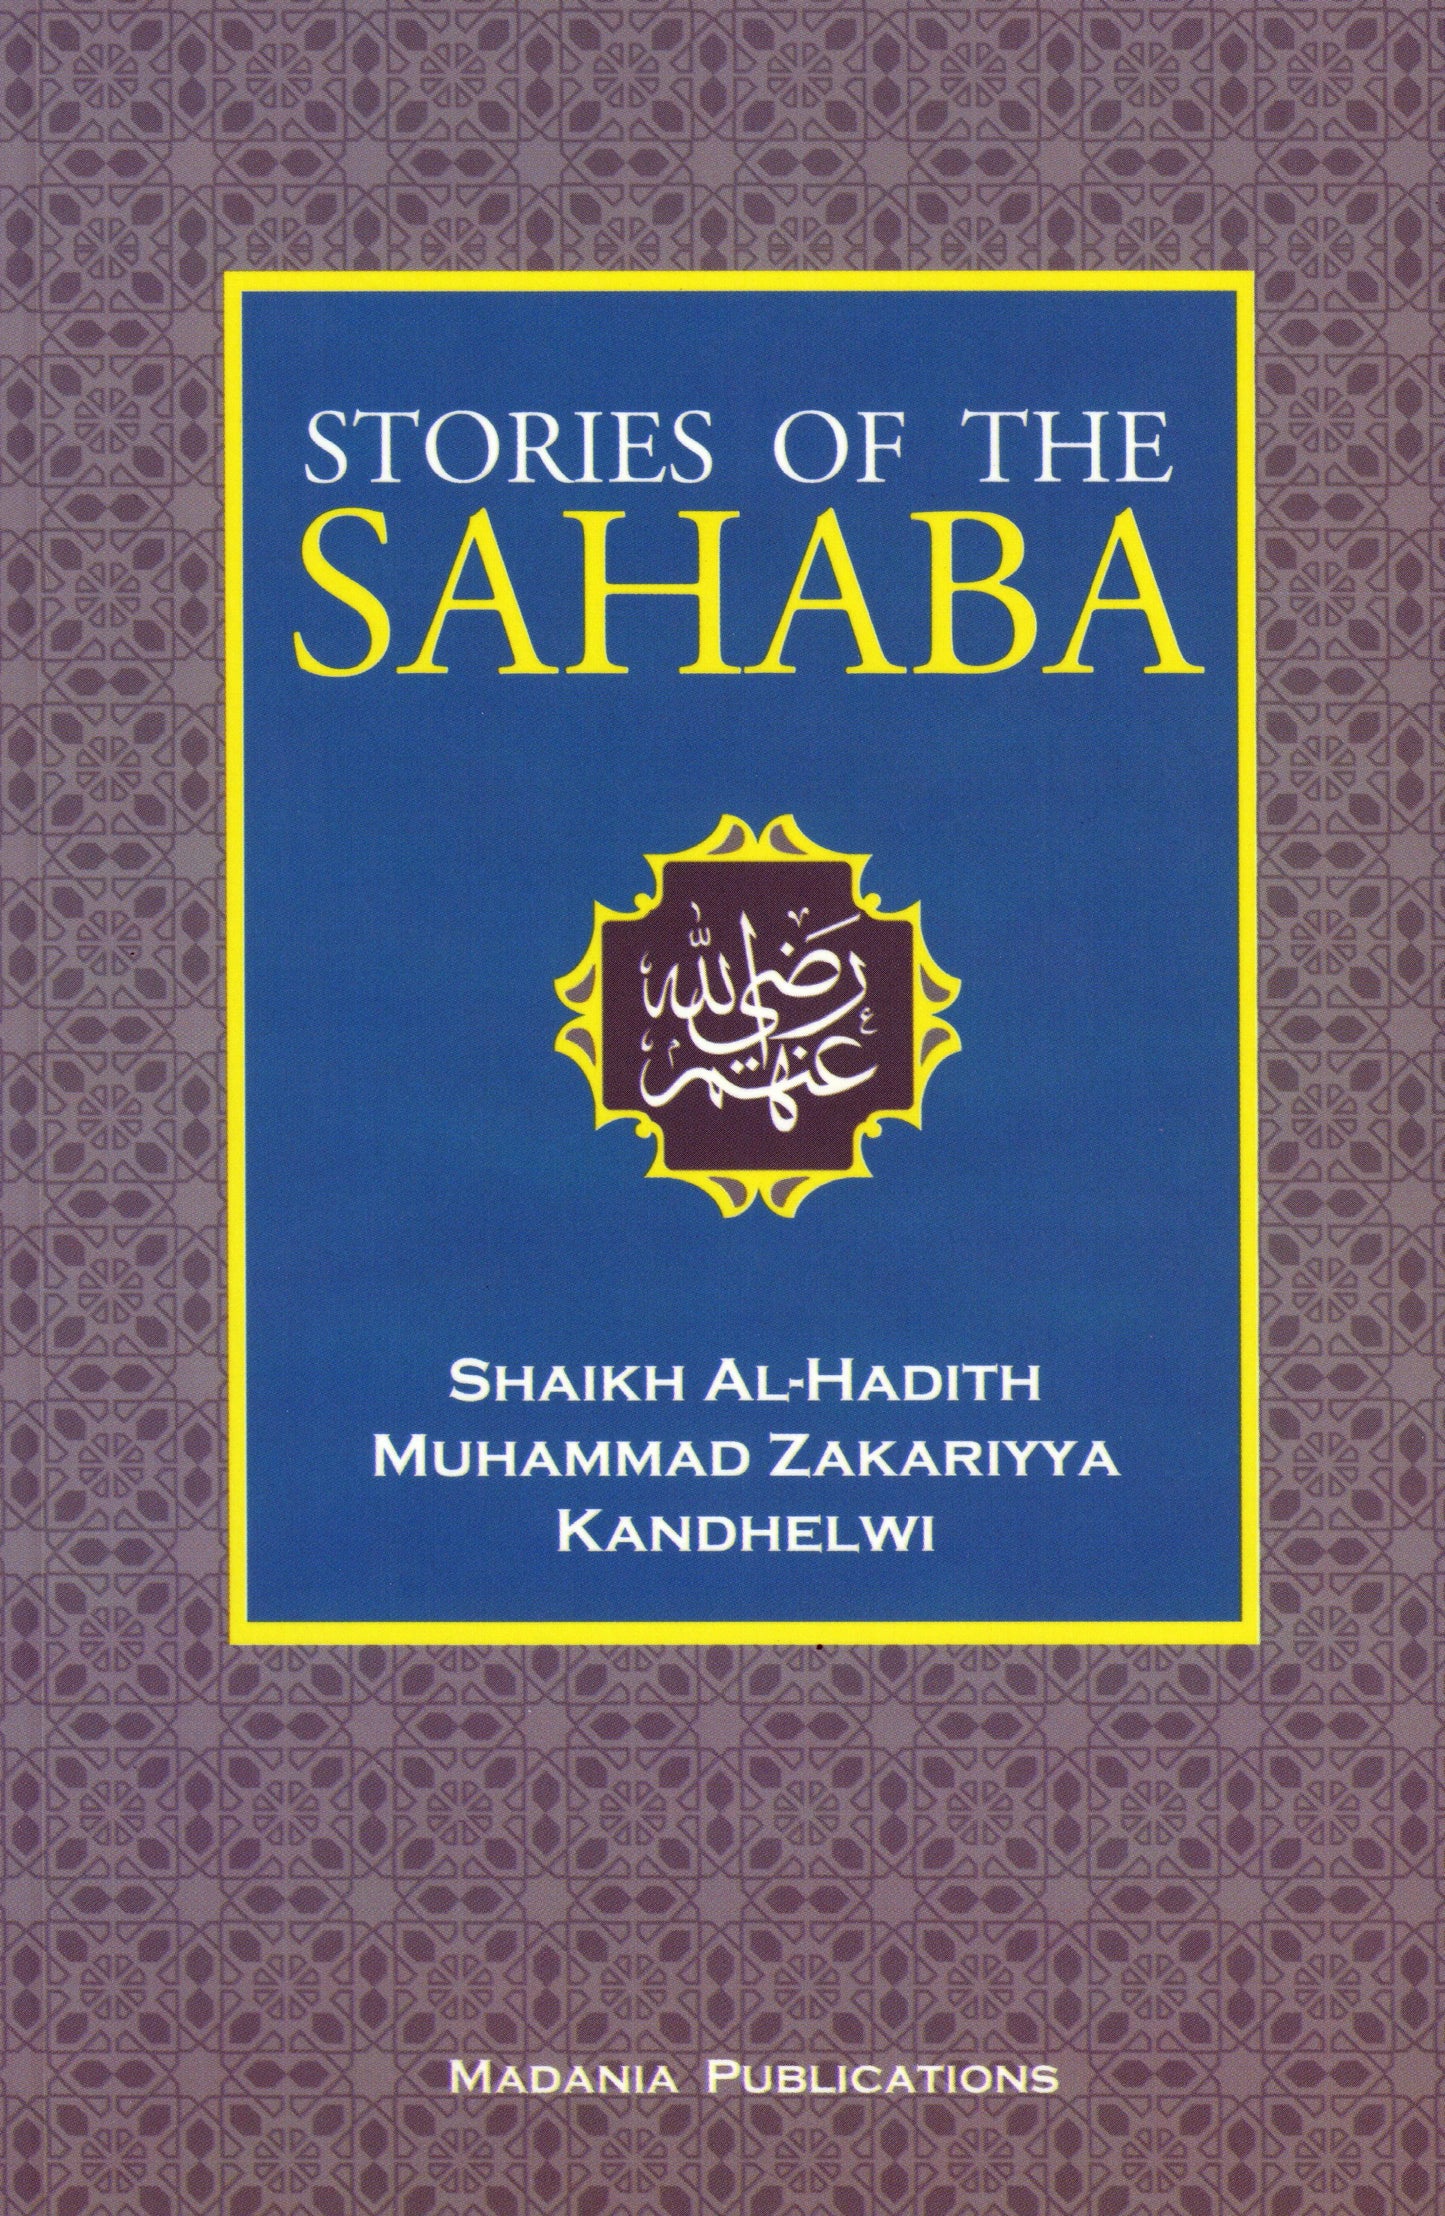 Stories of the Sahaba Madania Publications